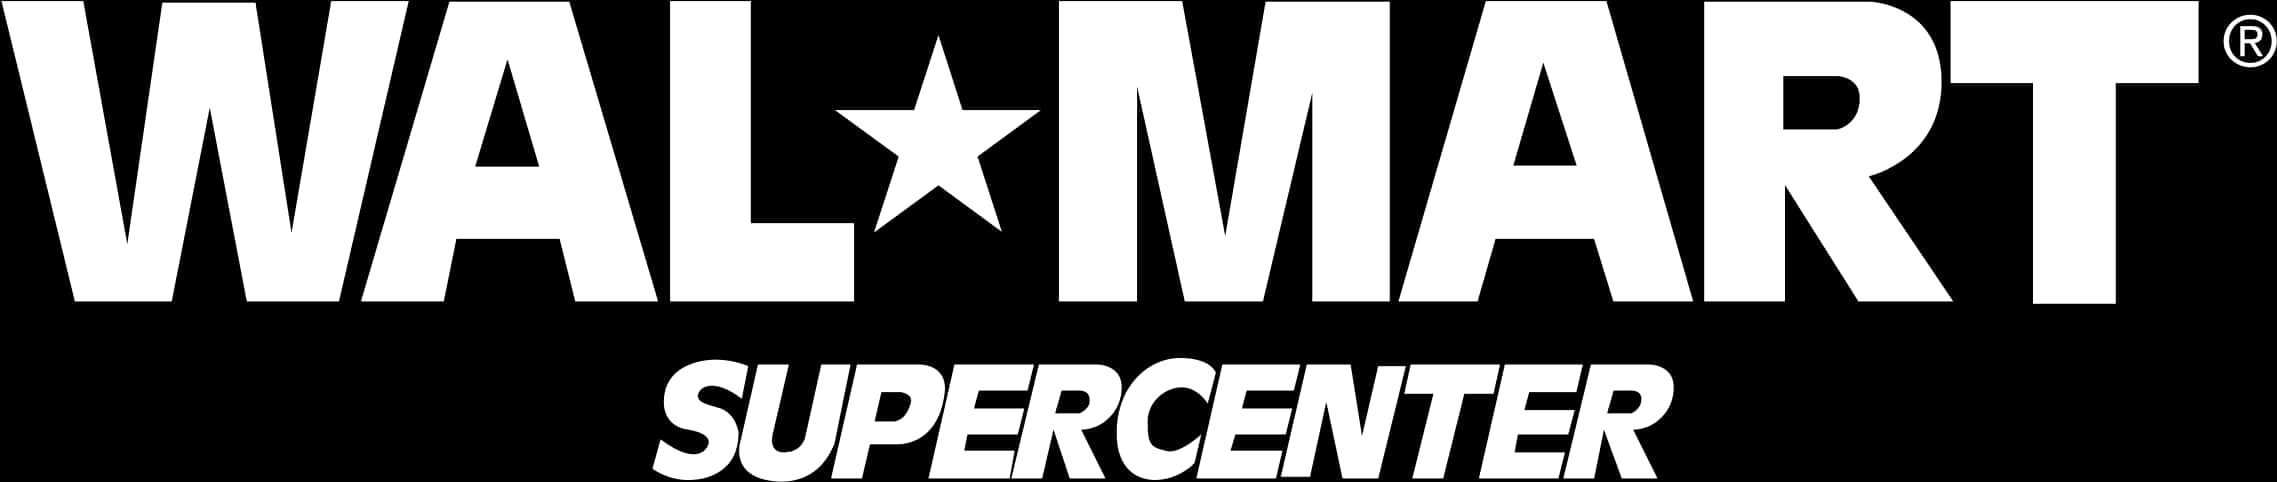 Walmart Supercenter Logo PNG image